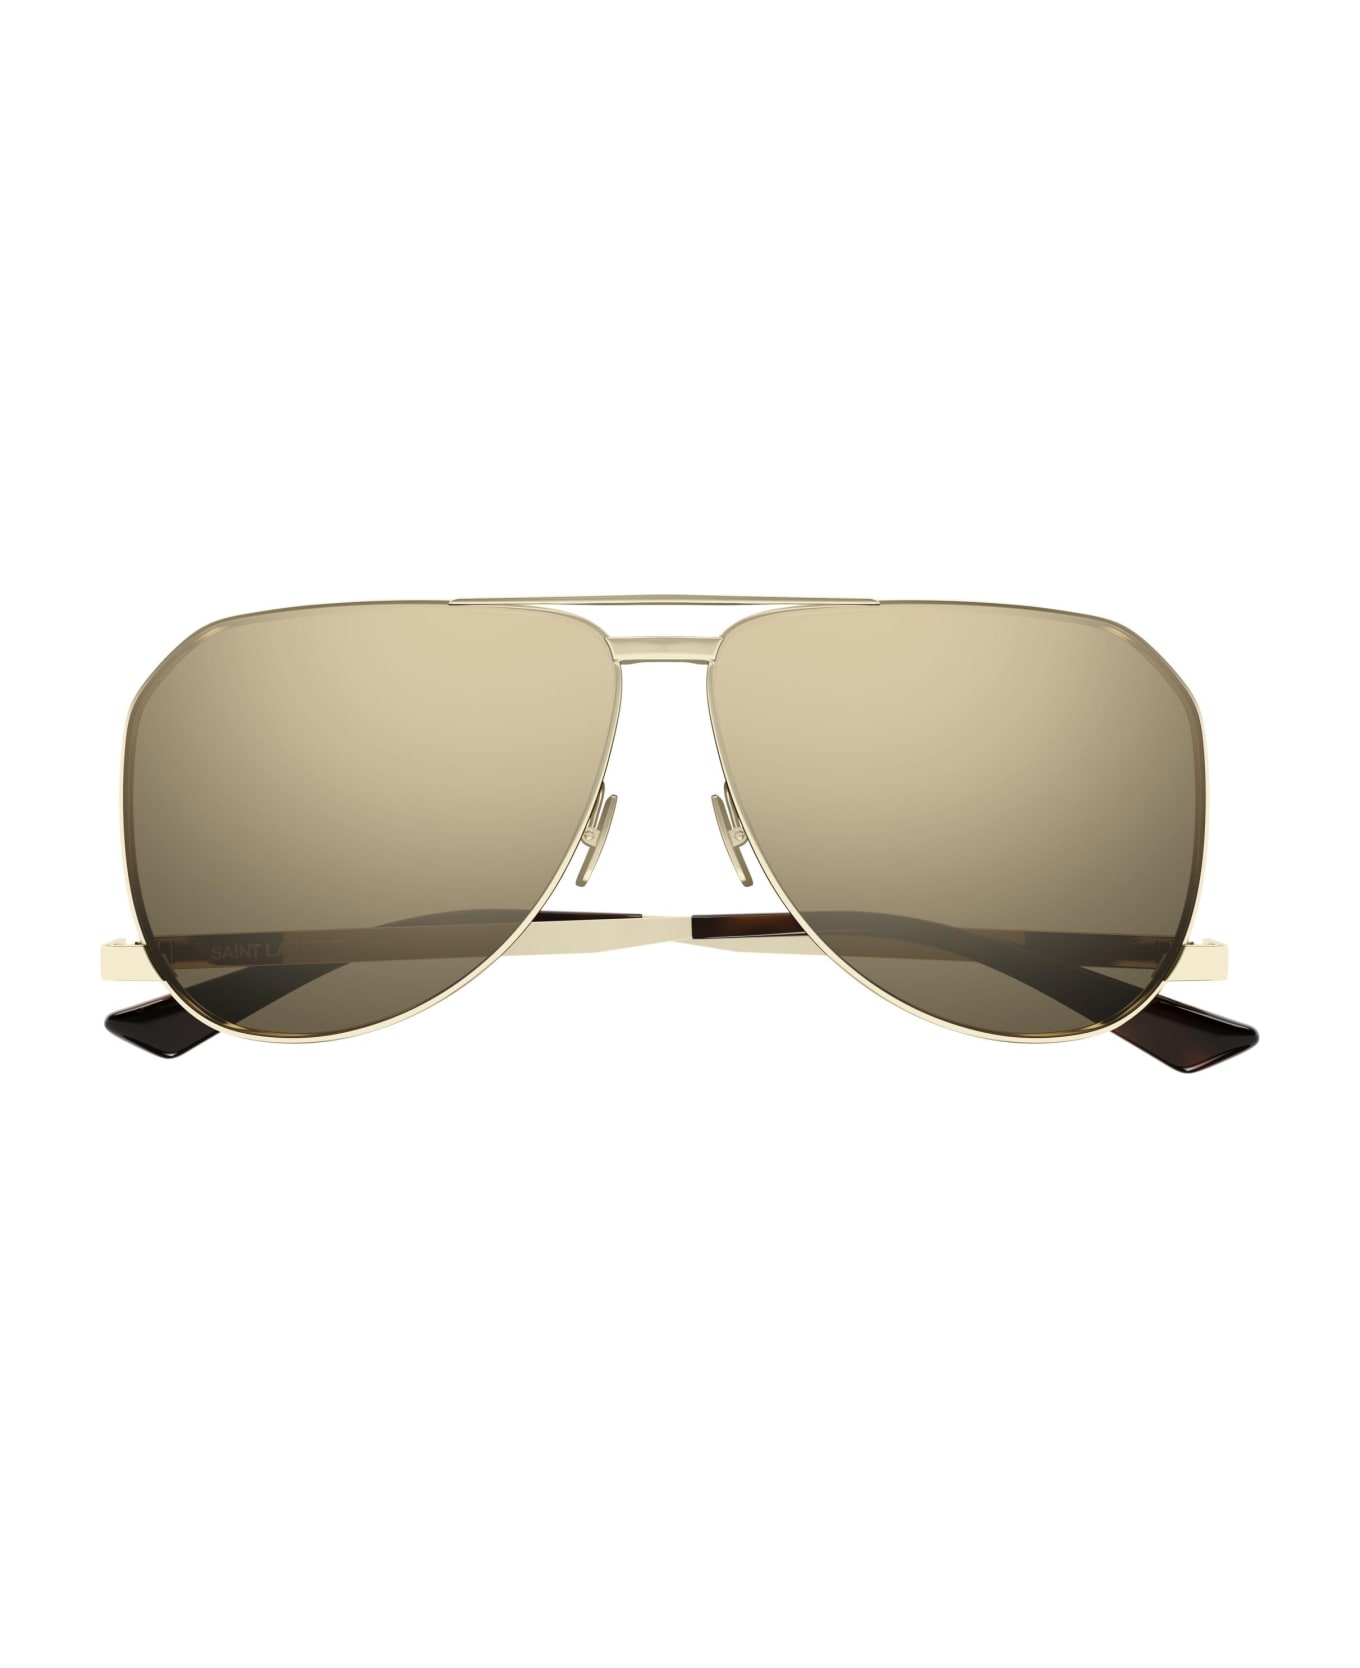 Saint Laurent Eyewear Sunglasses - Oro/Marrone